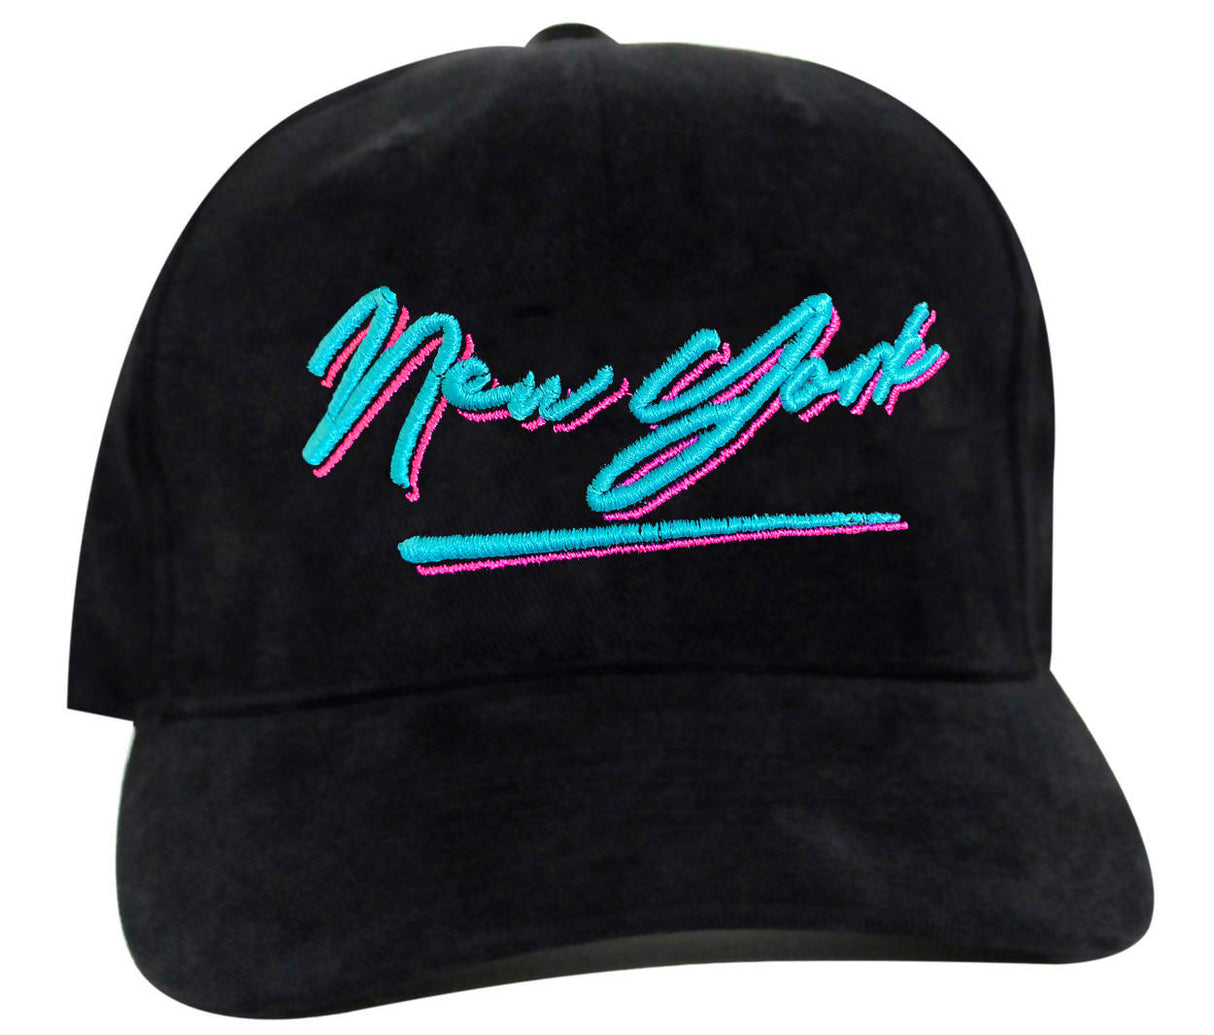 Curved or flat brim Hat - Retro New York